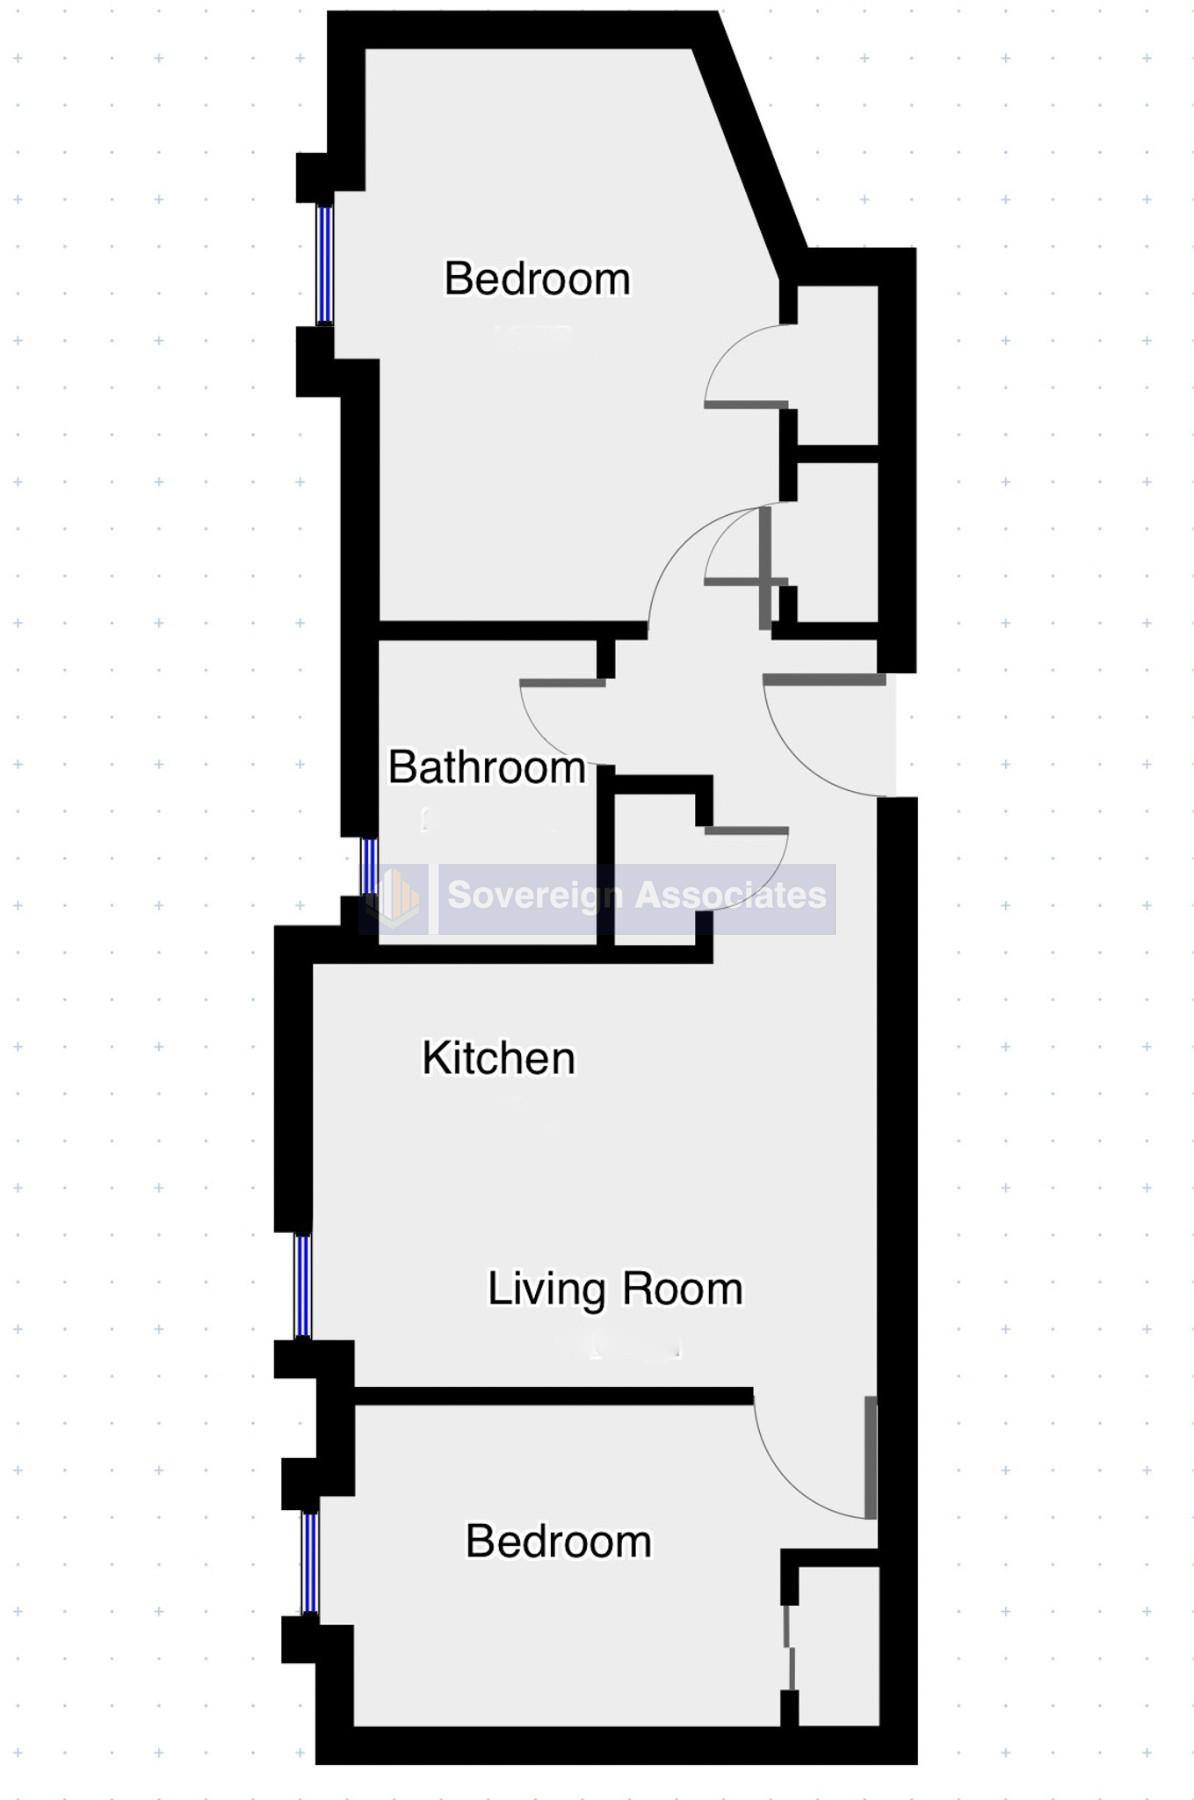 Floorplan for 235 West 103rd Street, 2A